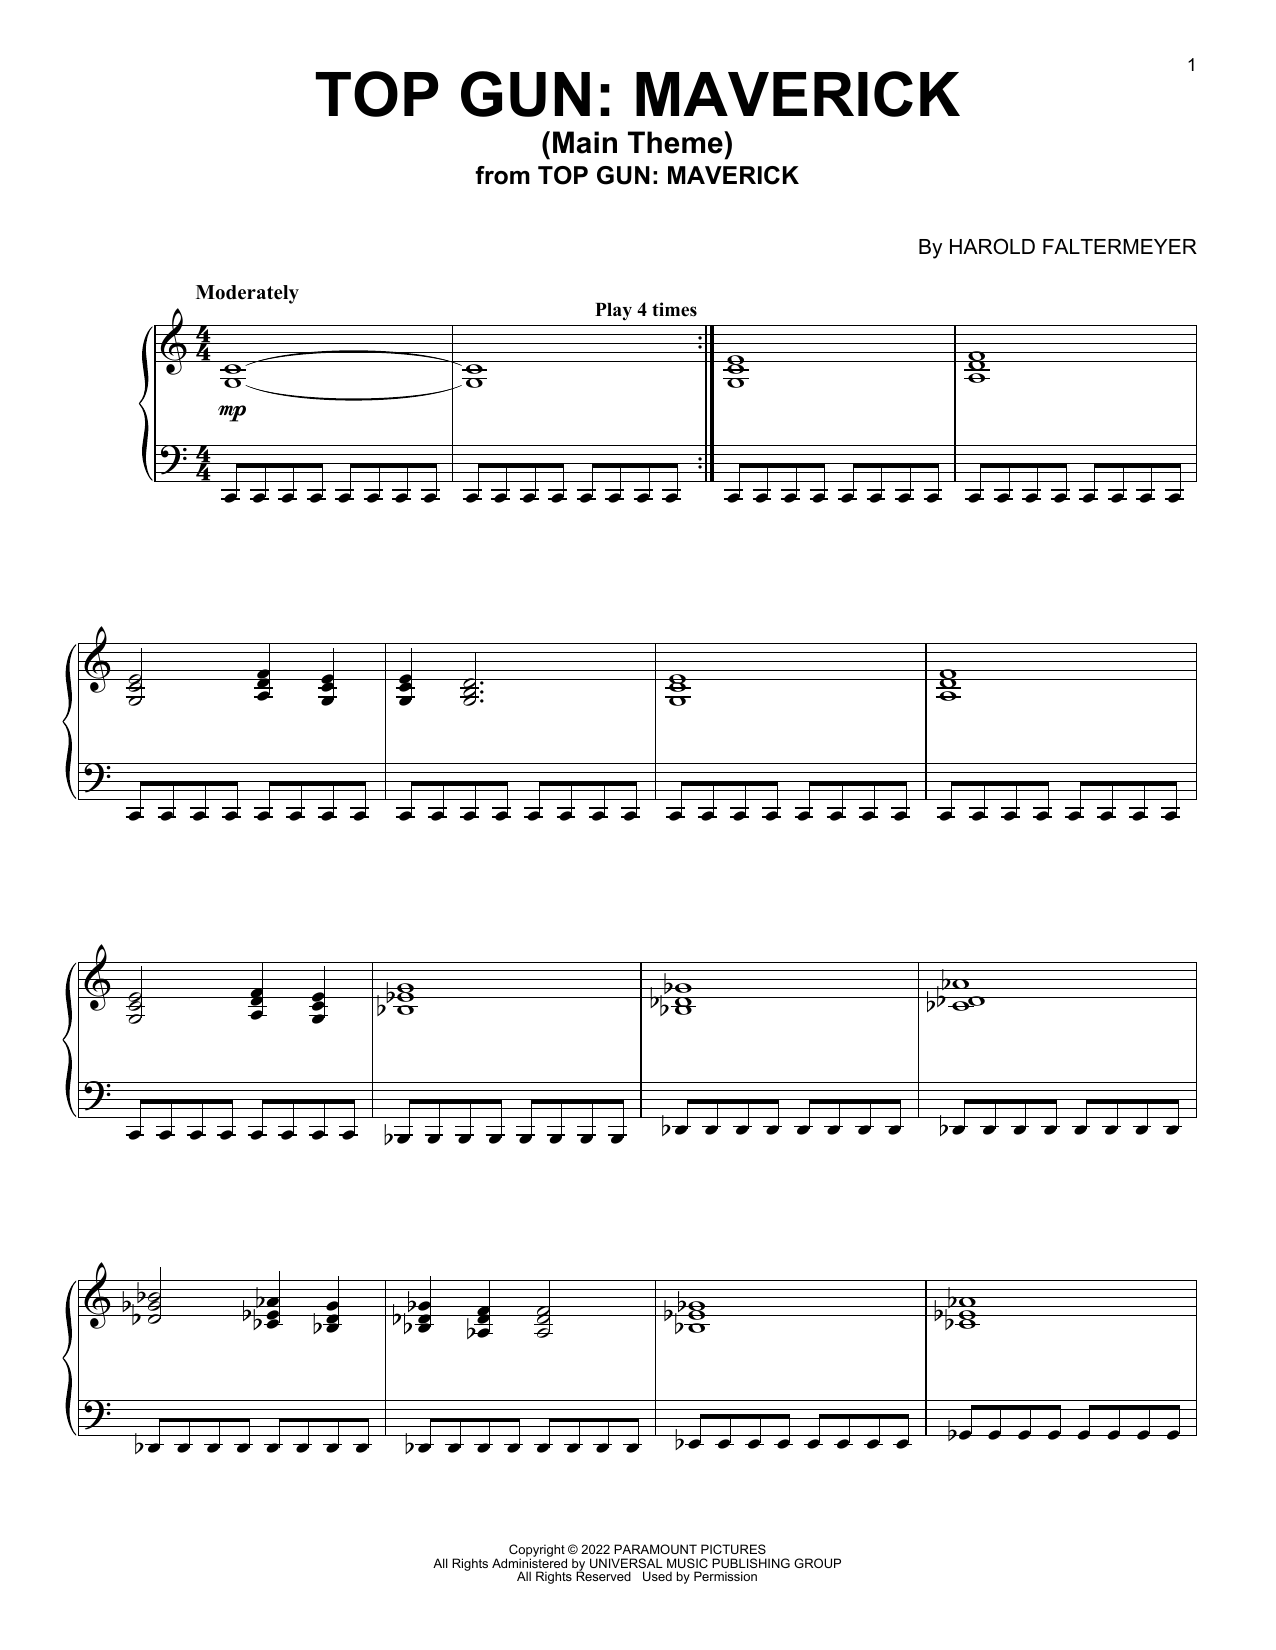 Hans Zimmer, Harold Faltermeyer, Lady Gaga & Lorne Balfe Top Gun: Maverick (Main Theme) Sheet Music Notes & Chords for Piano Solo - Download or Print PDF